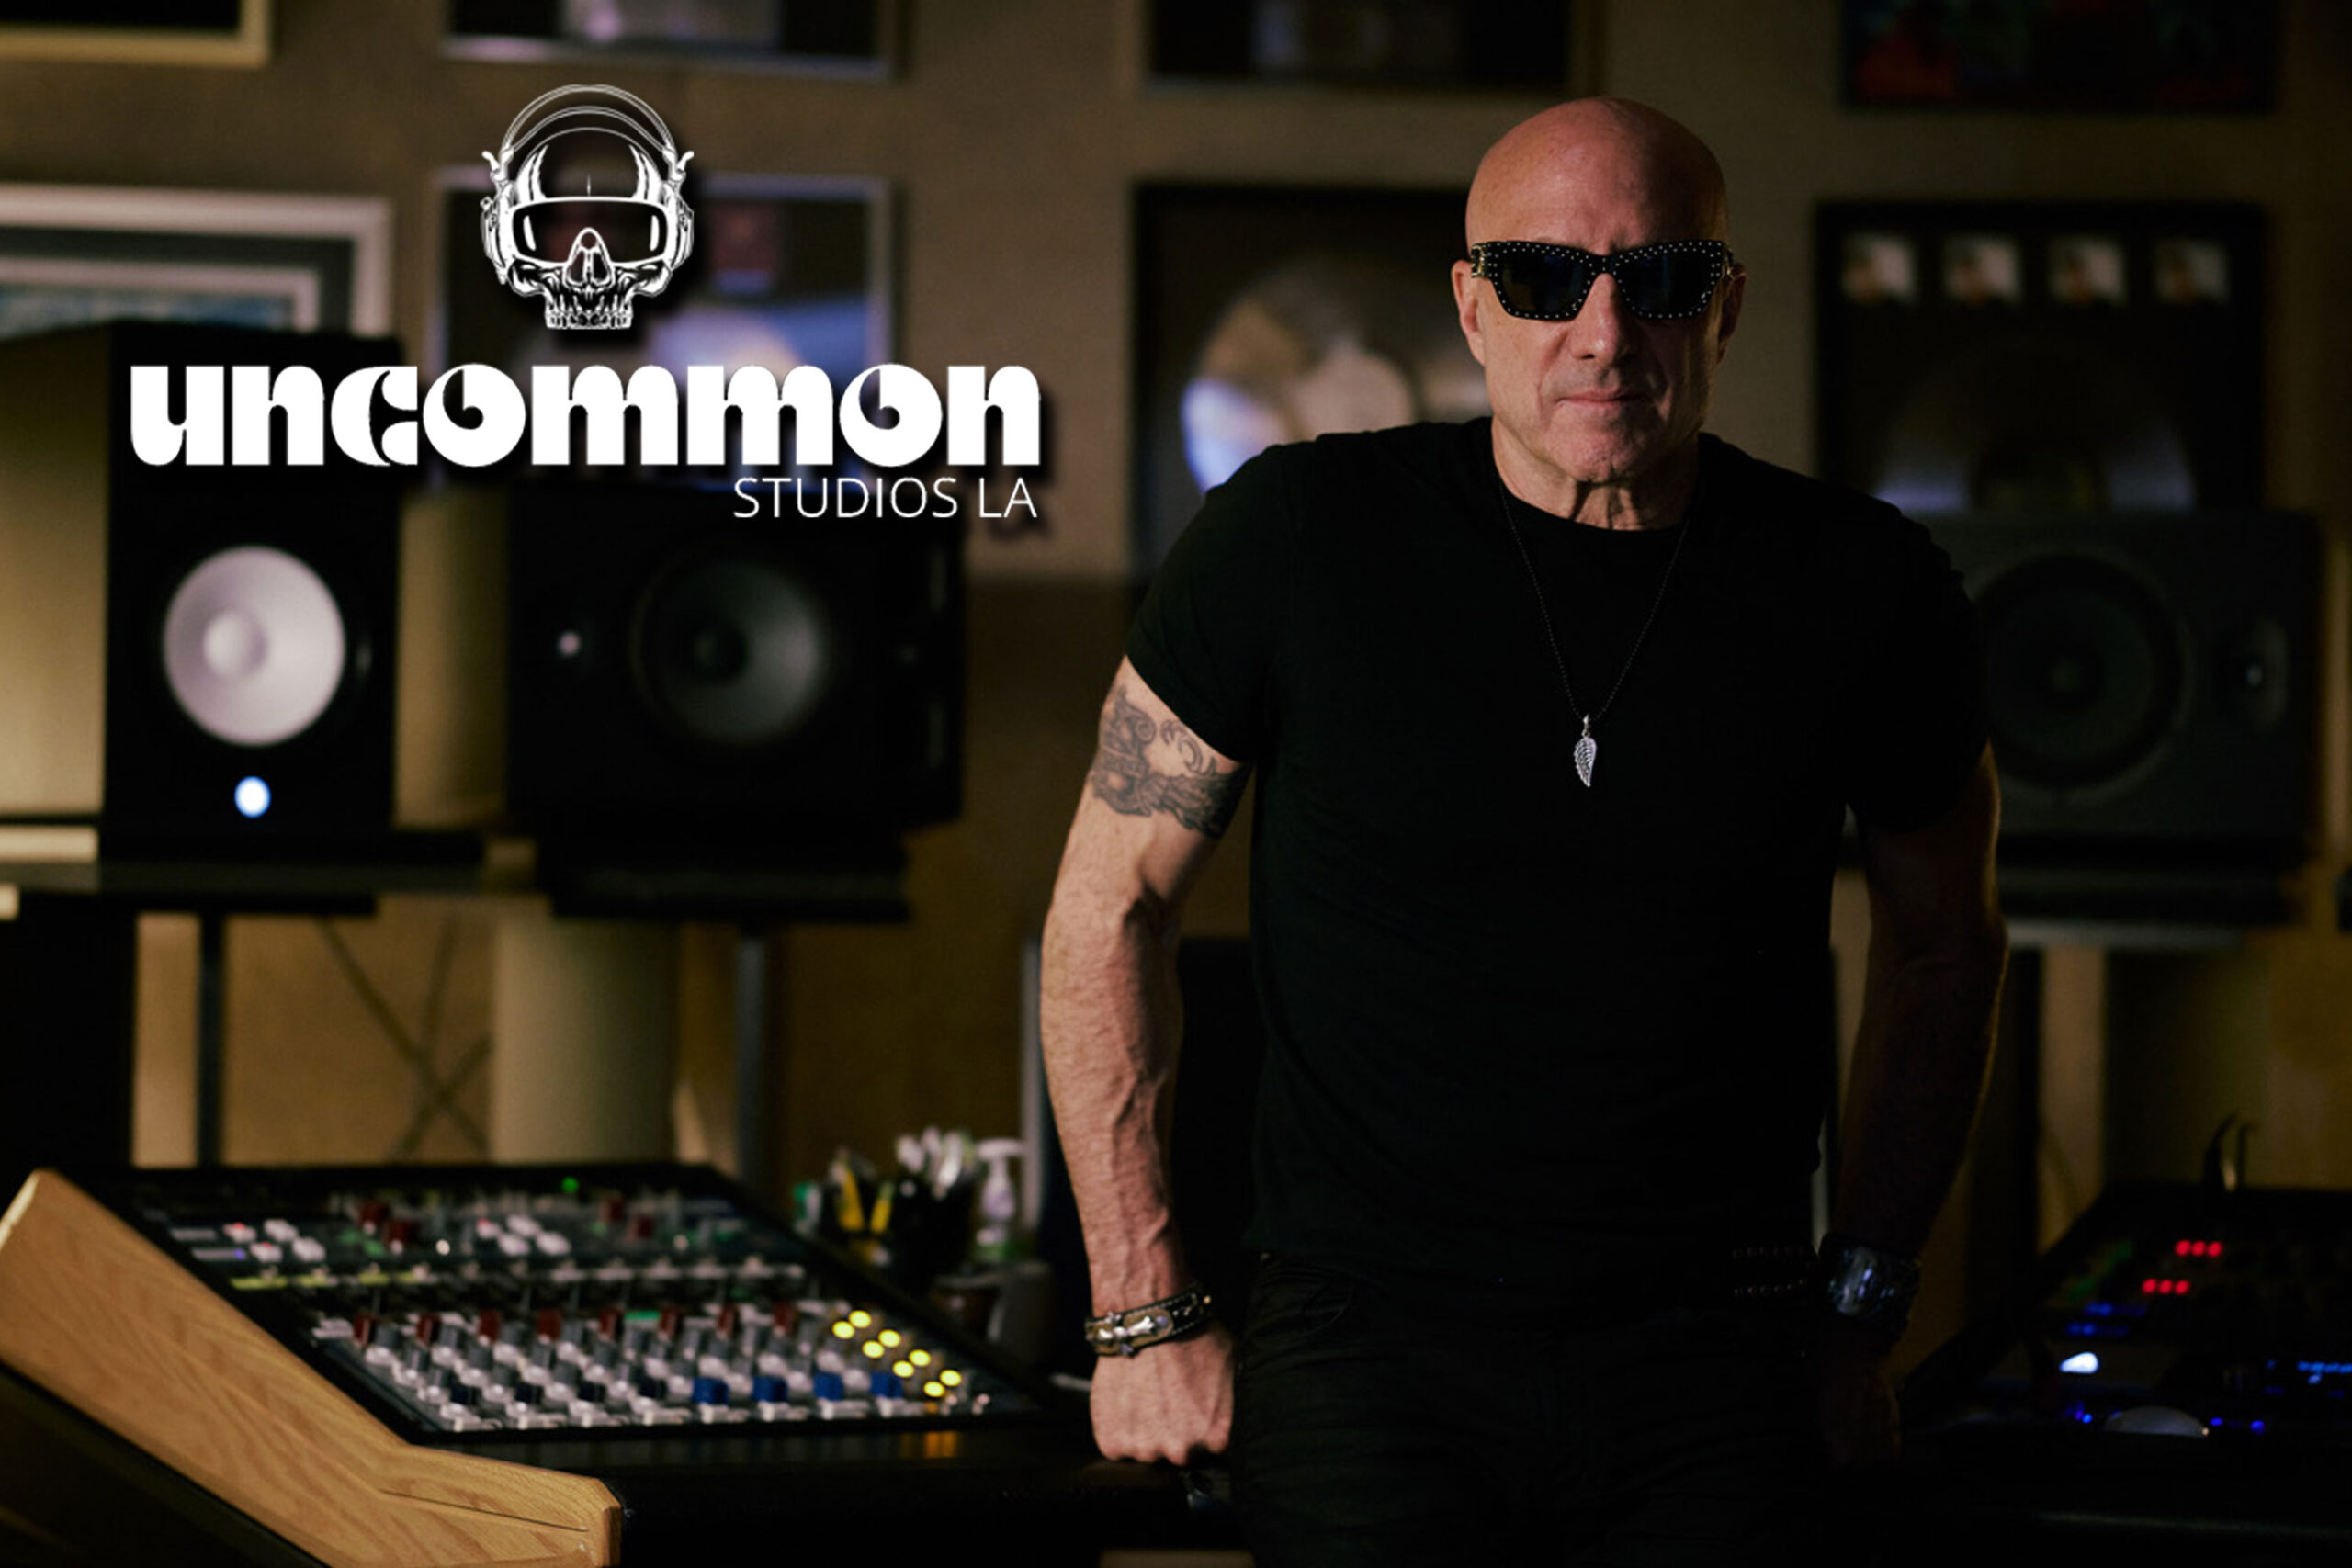 Uncommon Studios LA